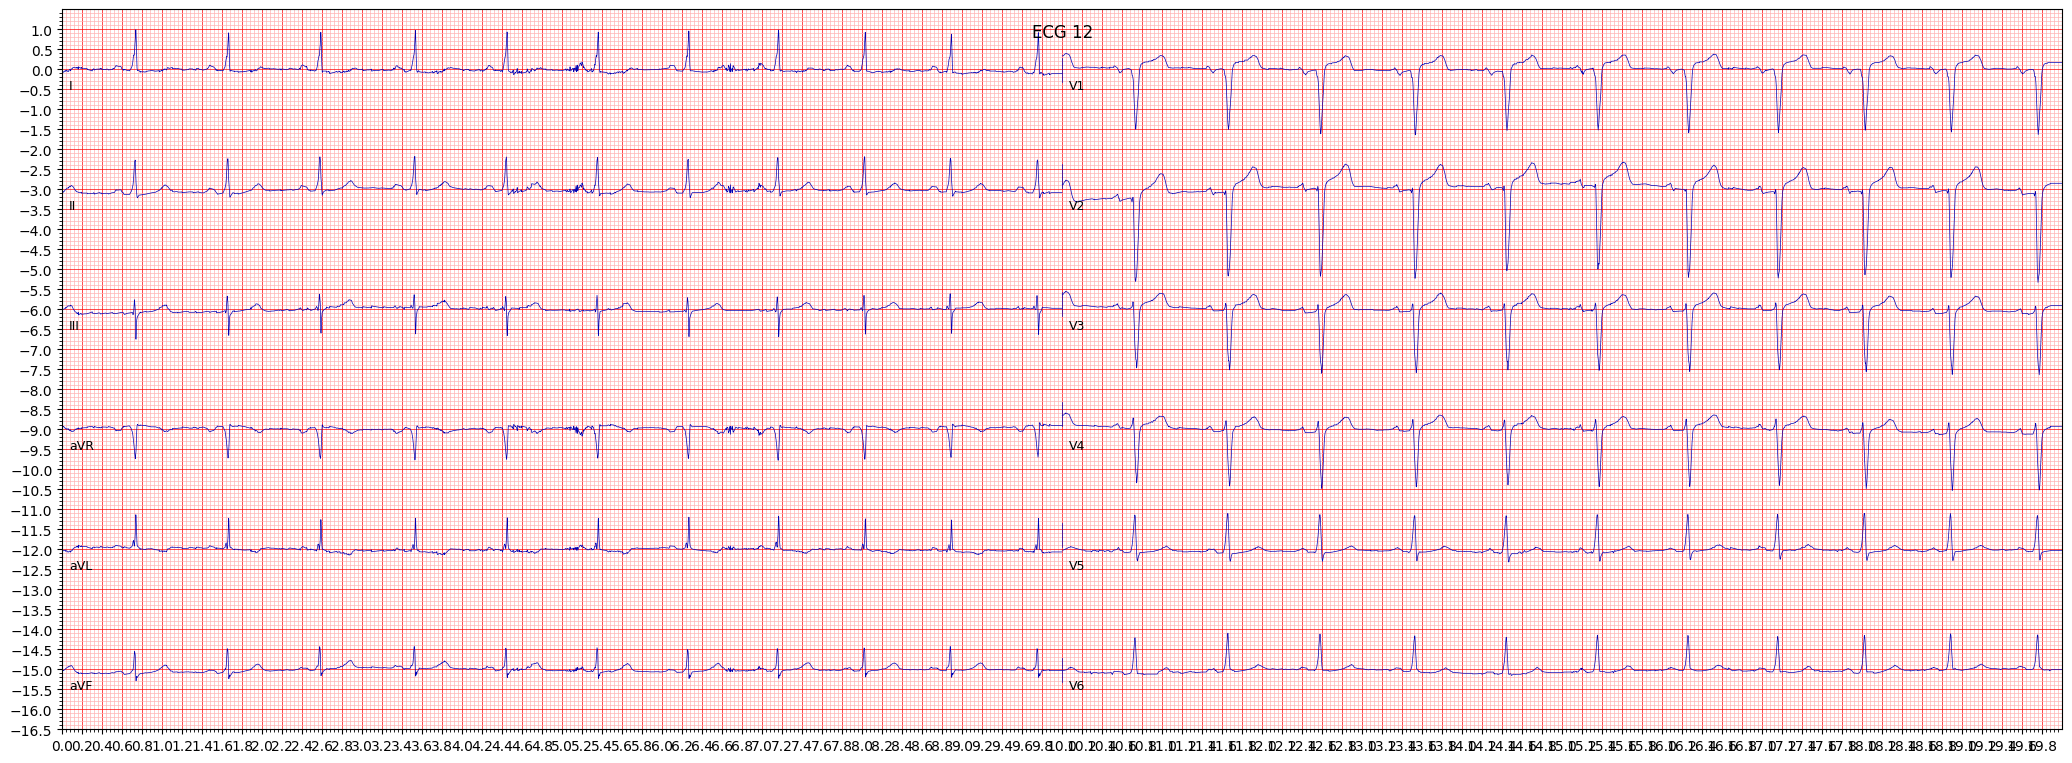 anterior myocardial infarction (AMI) example 15865